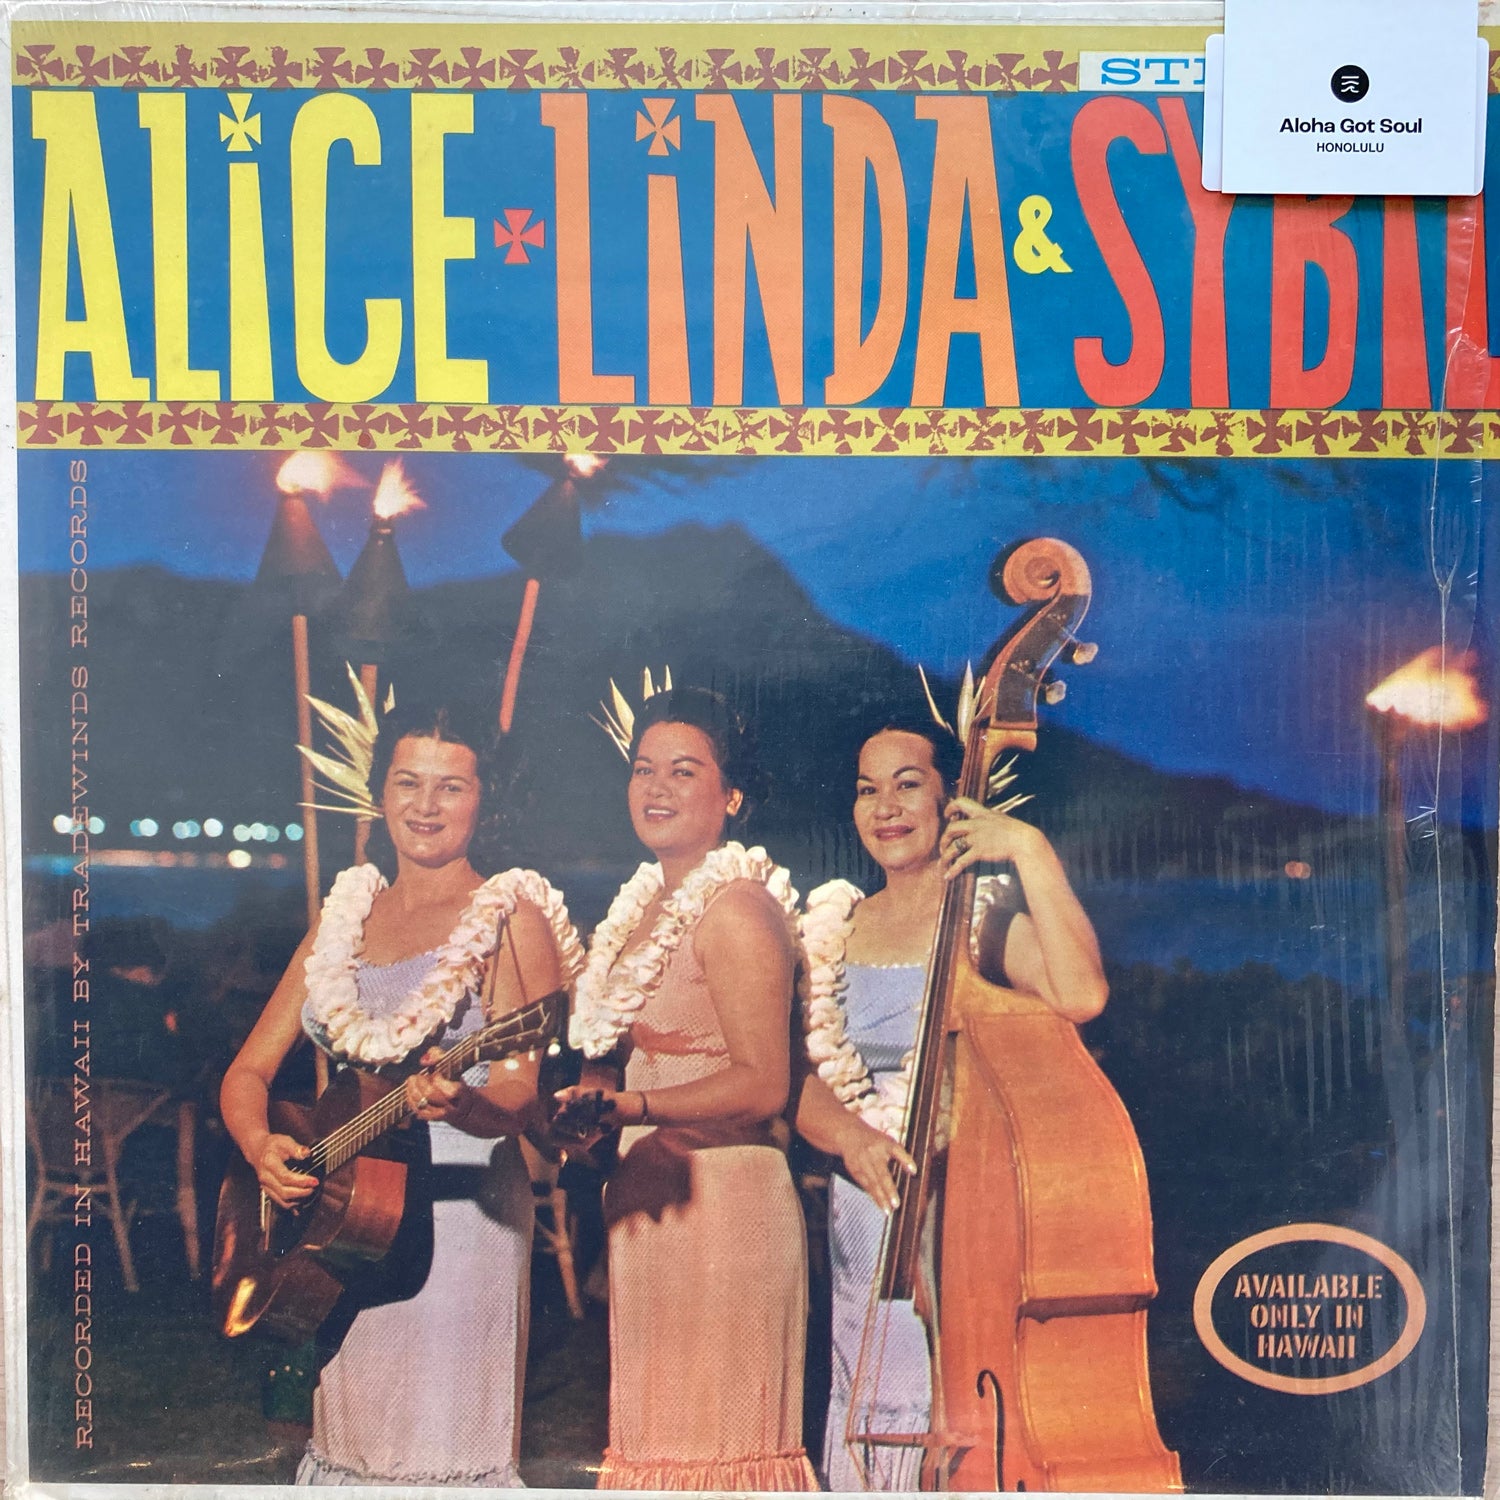 Alice Fredlund Serenaders - Alice, Linda & Sybil